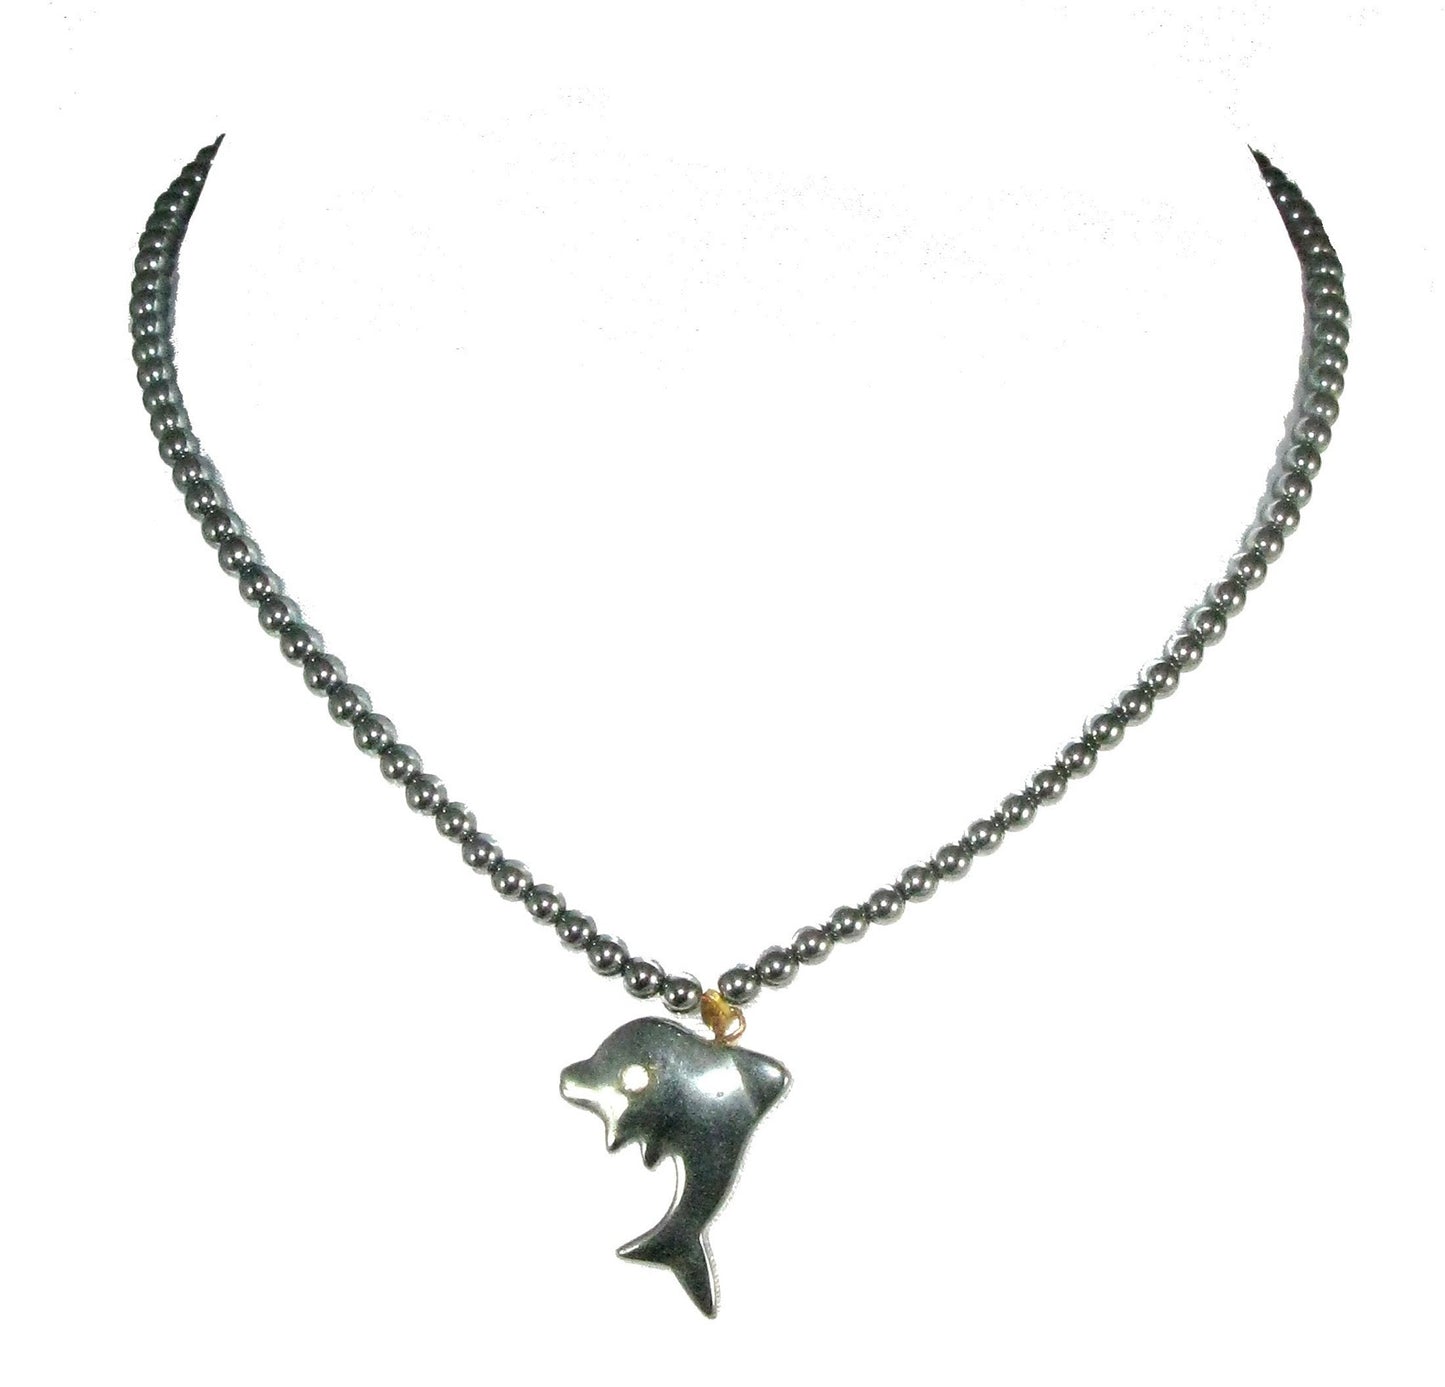 Hematite Healing Energy Anti-Stress Necklace 18" / 45 cm Dolphin Pendant Handmade + Presentation Pouch & Storycard